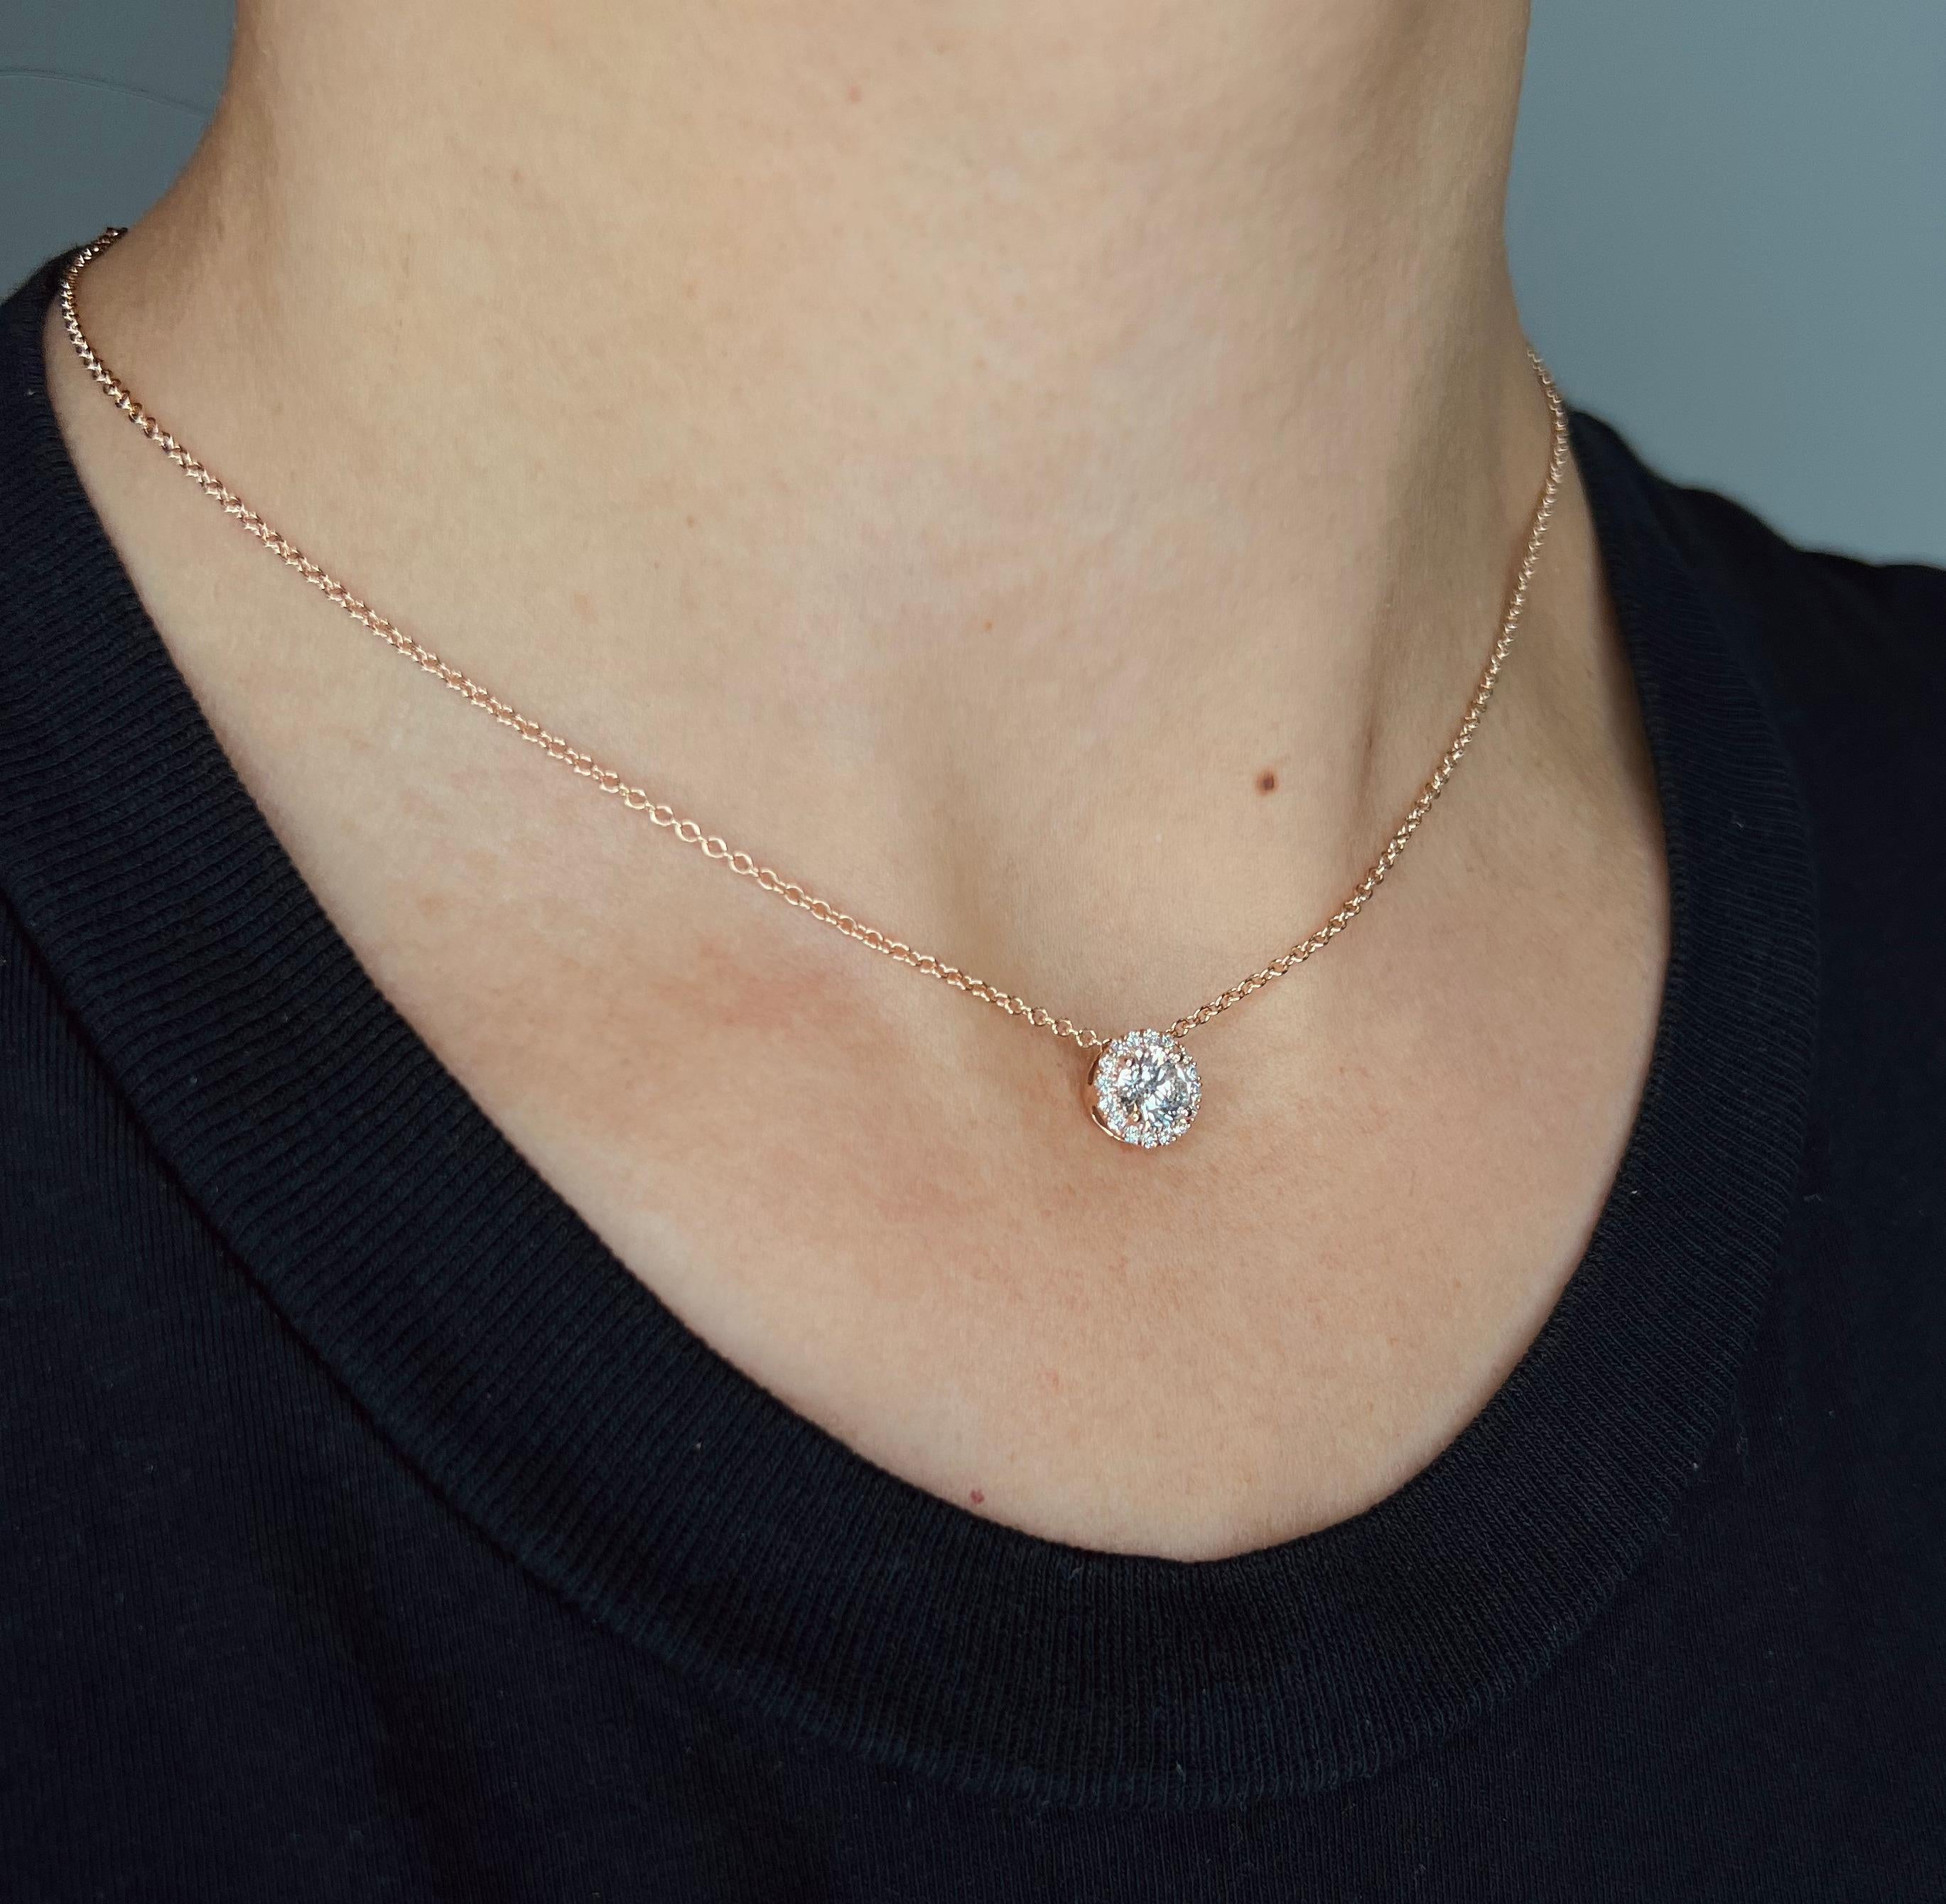 Women's or Men's 14k White Gold 0.40 Carat Round Cut Diamond Solitaire Pendant Necklace For Sale